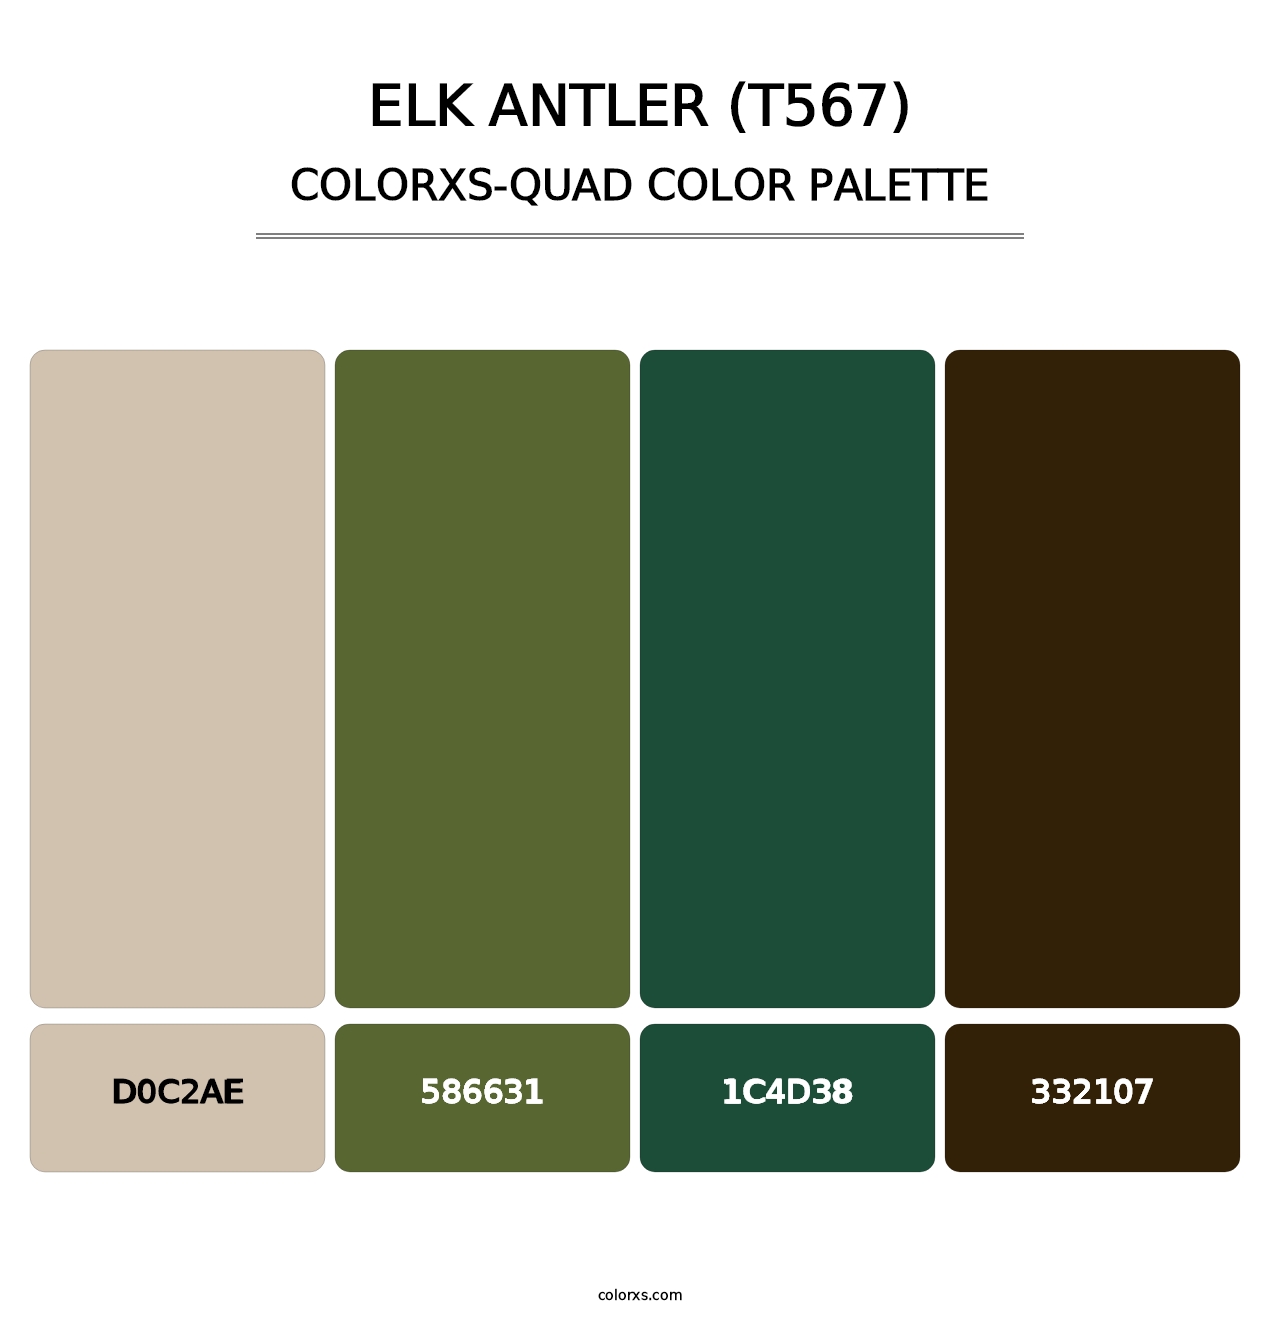 Elk Antler (T567) - Colorxs Quad Palette